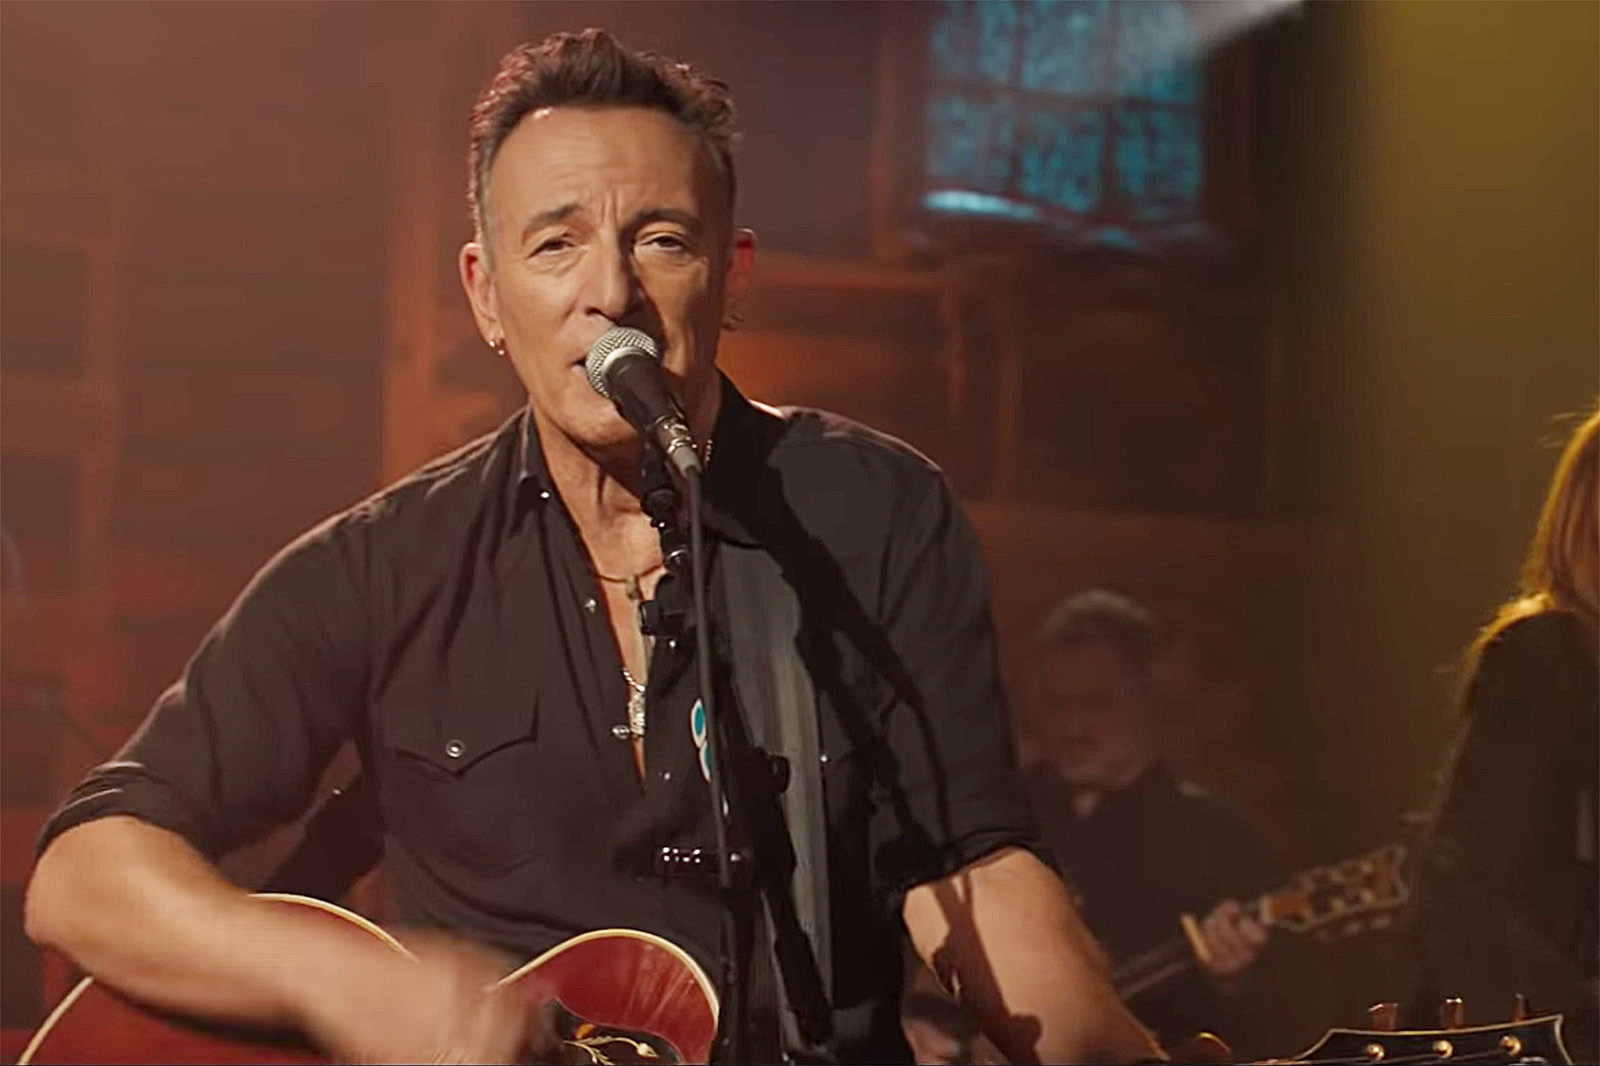 Watch Bruce Springsteen's 'Sundown' from 'Western Stars' Movie